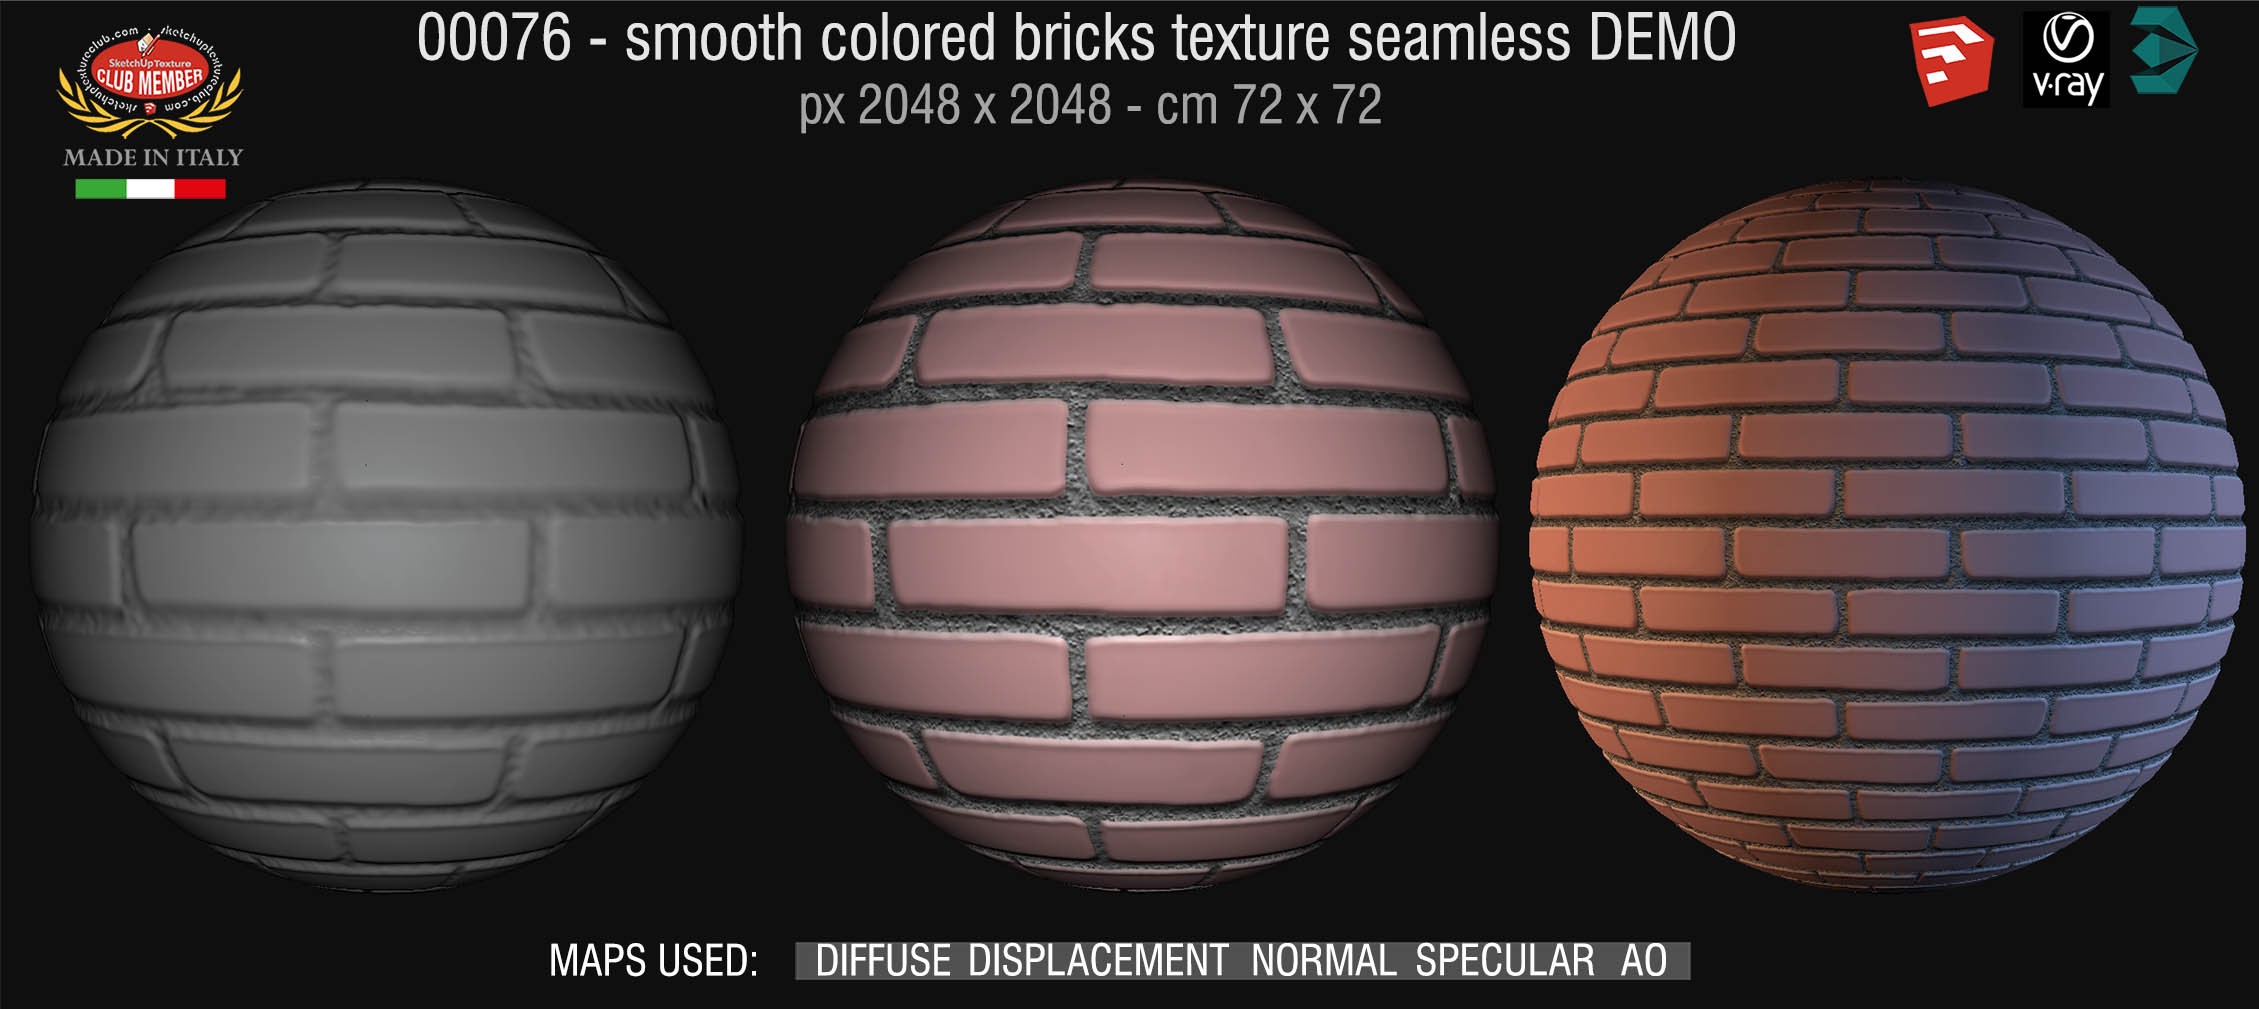 00076 smooth colored bricks texture seamless + maps DEMO